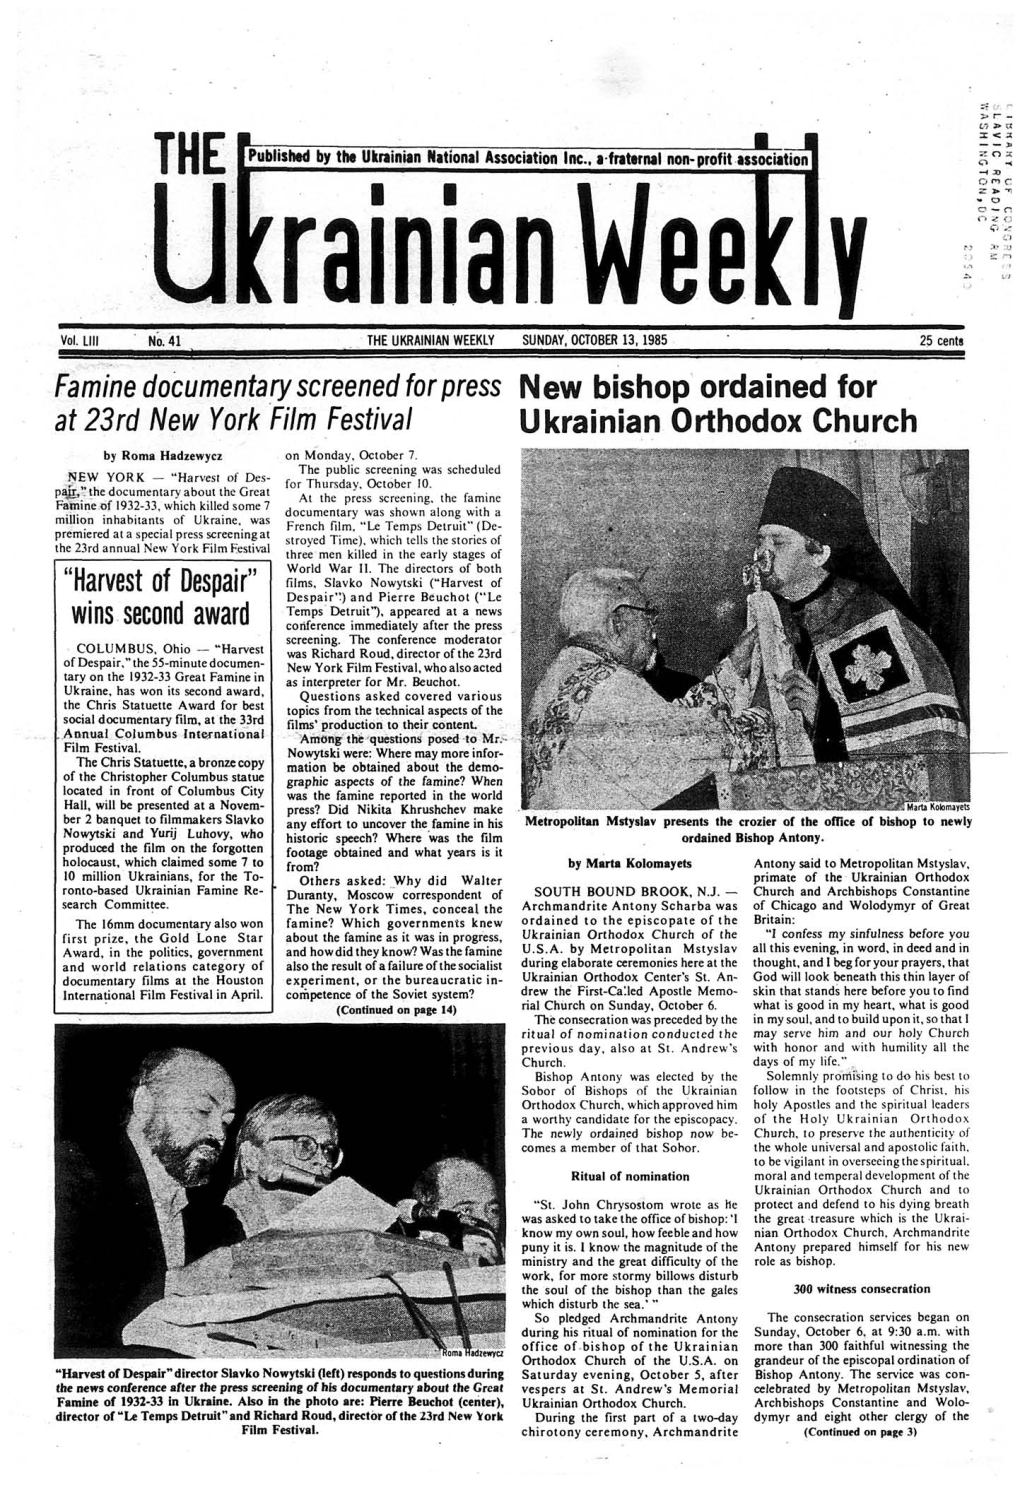 The Ukrainian Weekly 1985, No.41